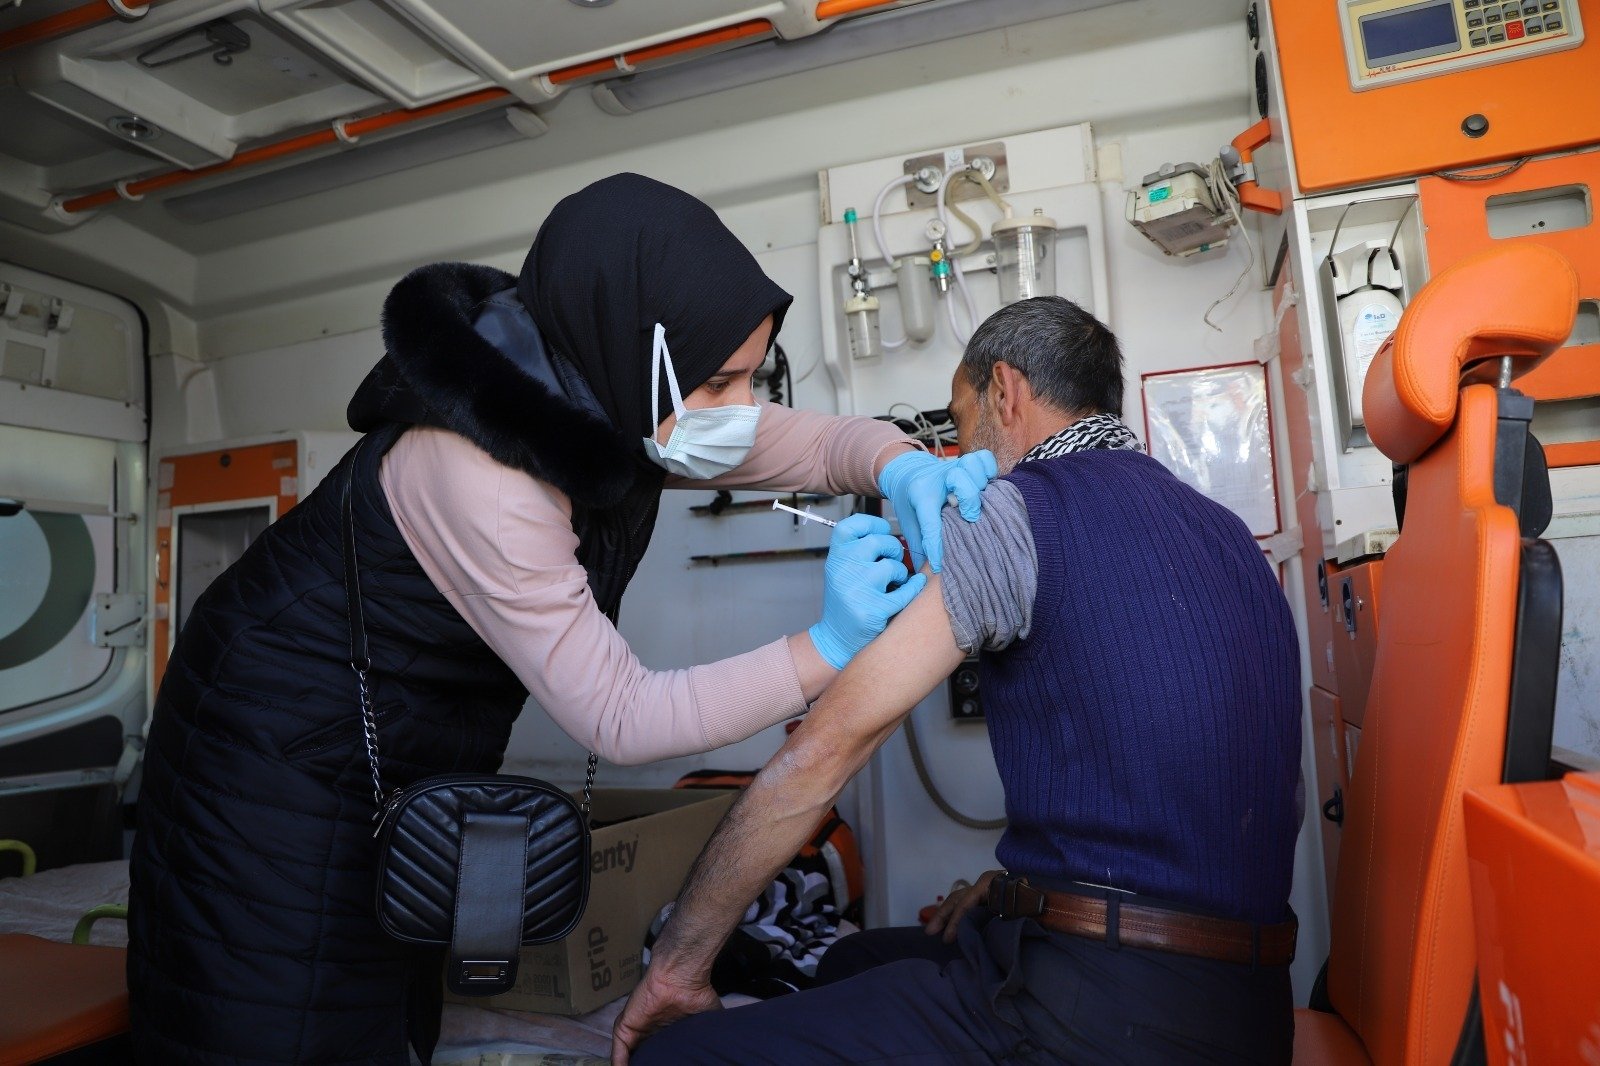 A man gets vaccinated against COVID-19 inside an ambulance, in Şanlıurfa, southeastern Turkey, Feb. 16, 2022. (AA Photo)